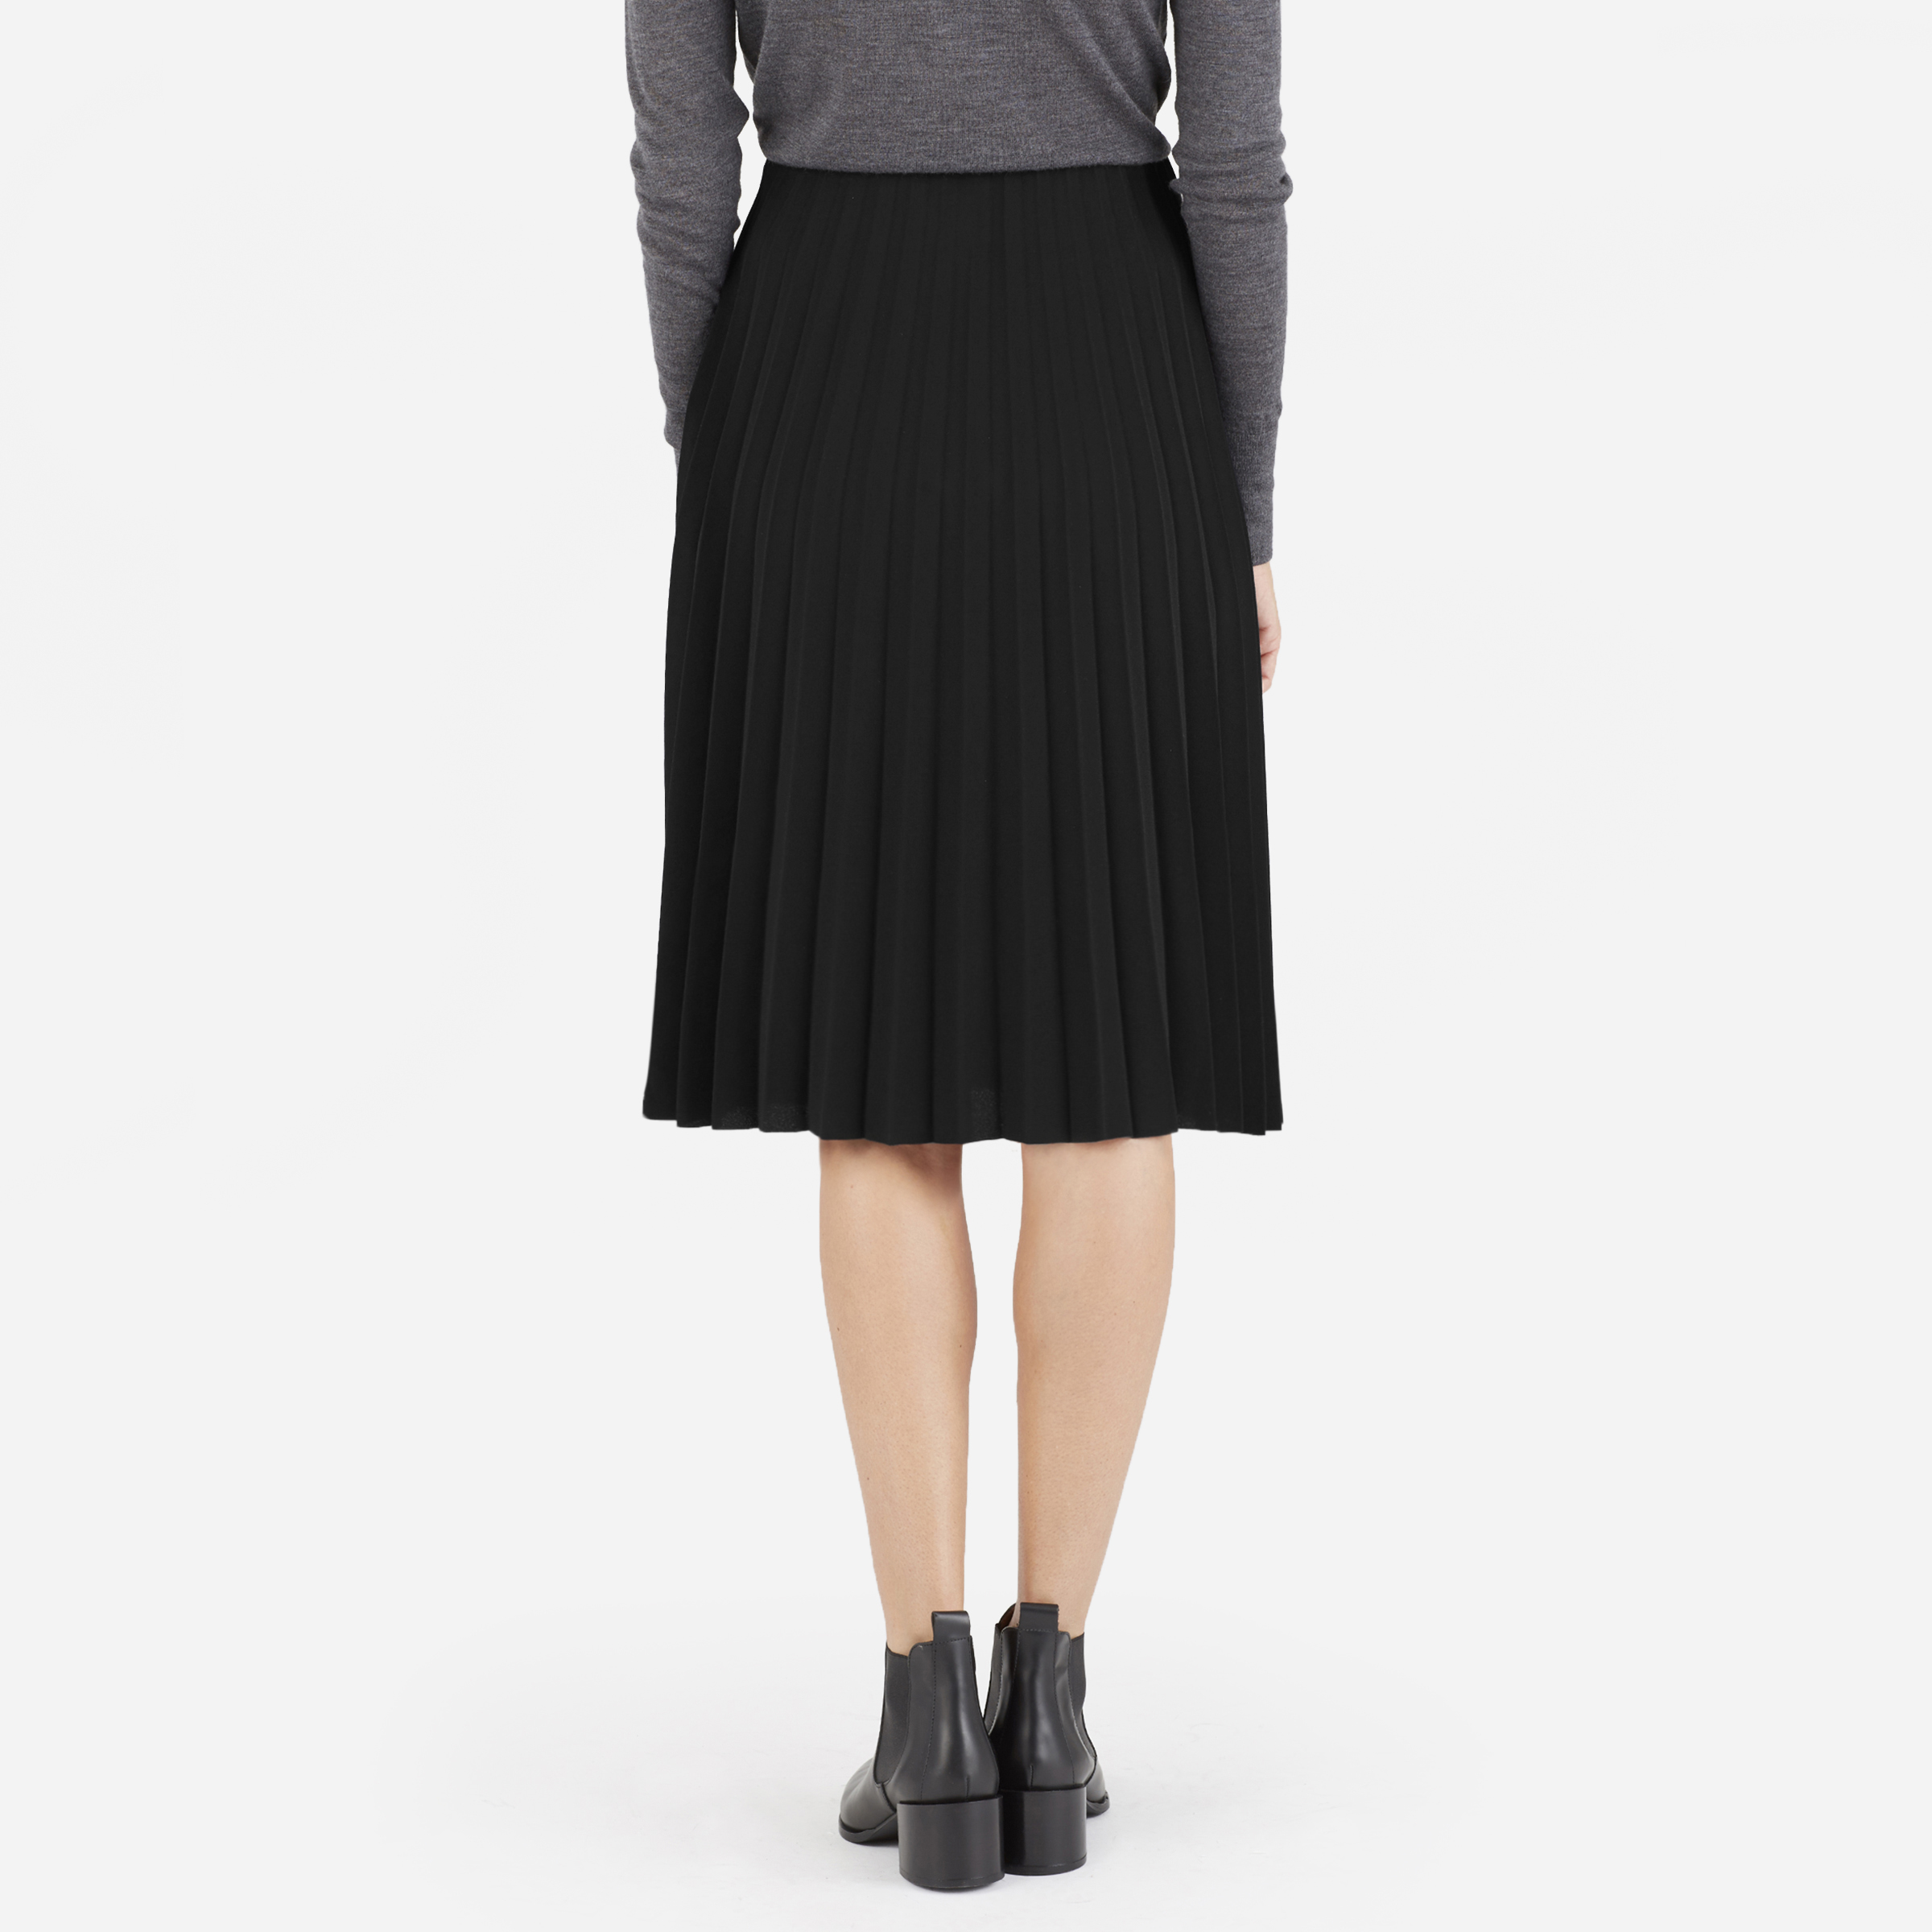 the pleated skirt - $88 dweegqd